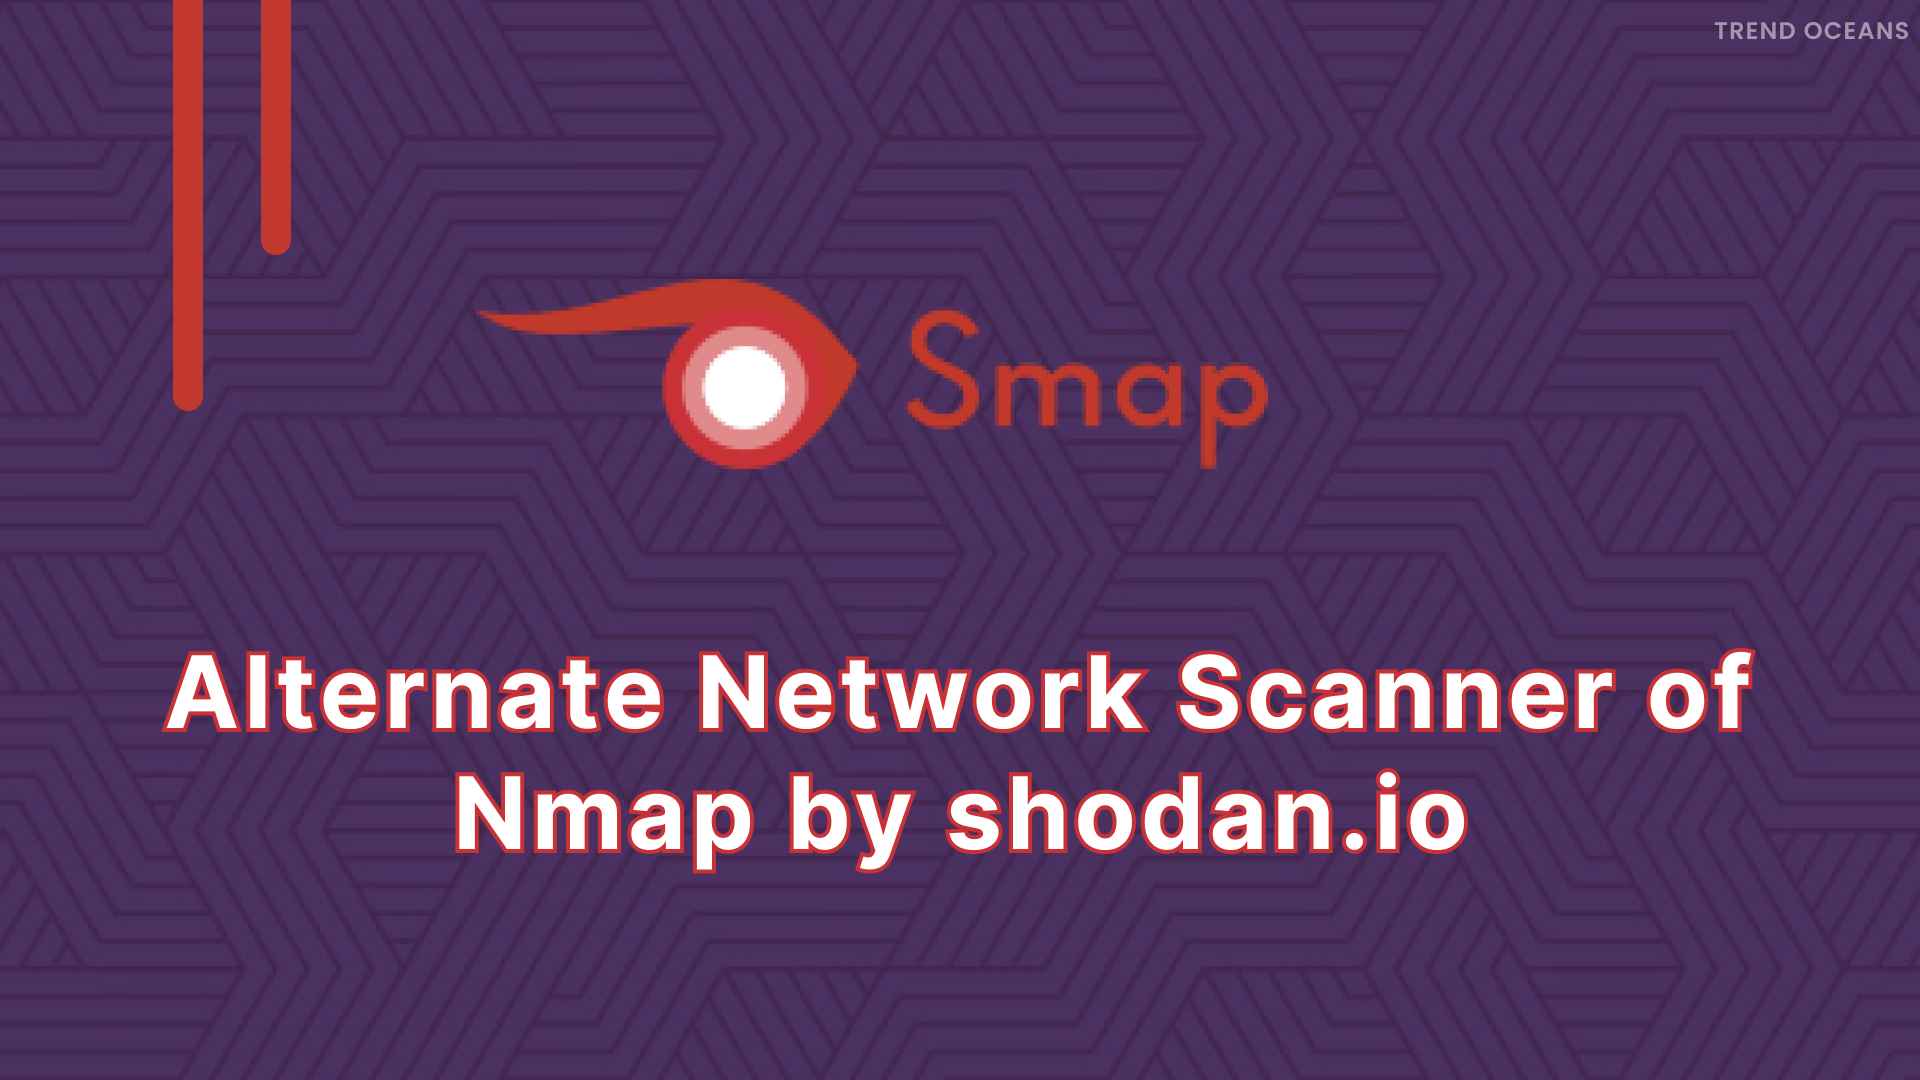 smap network scanner alternative of nmap